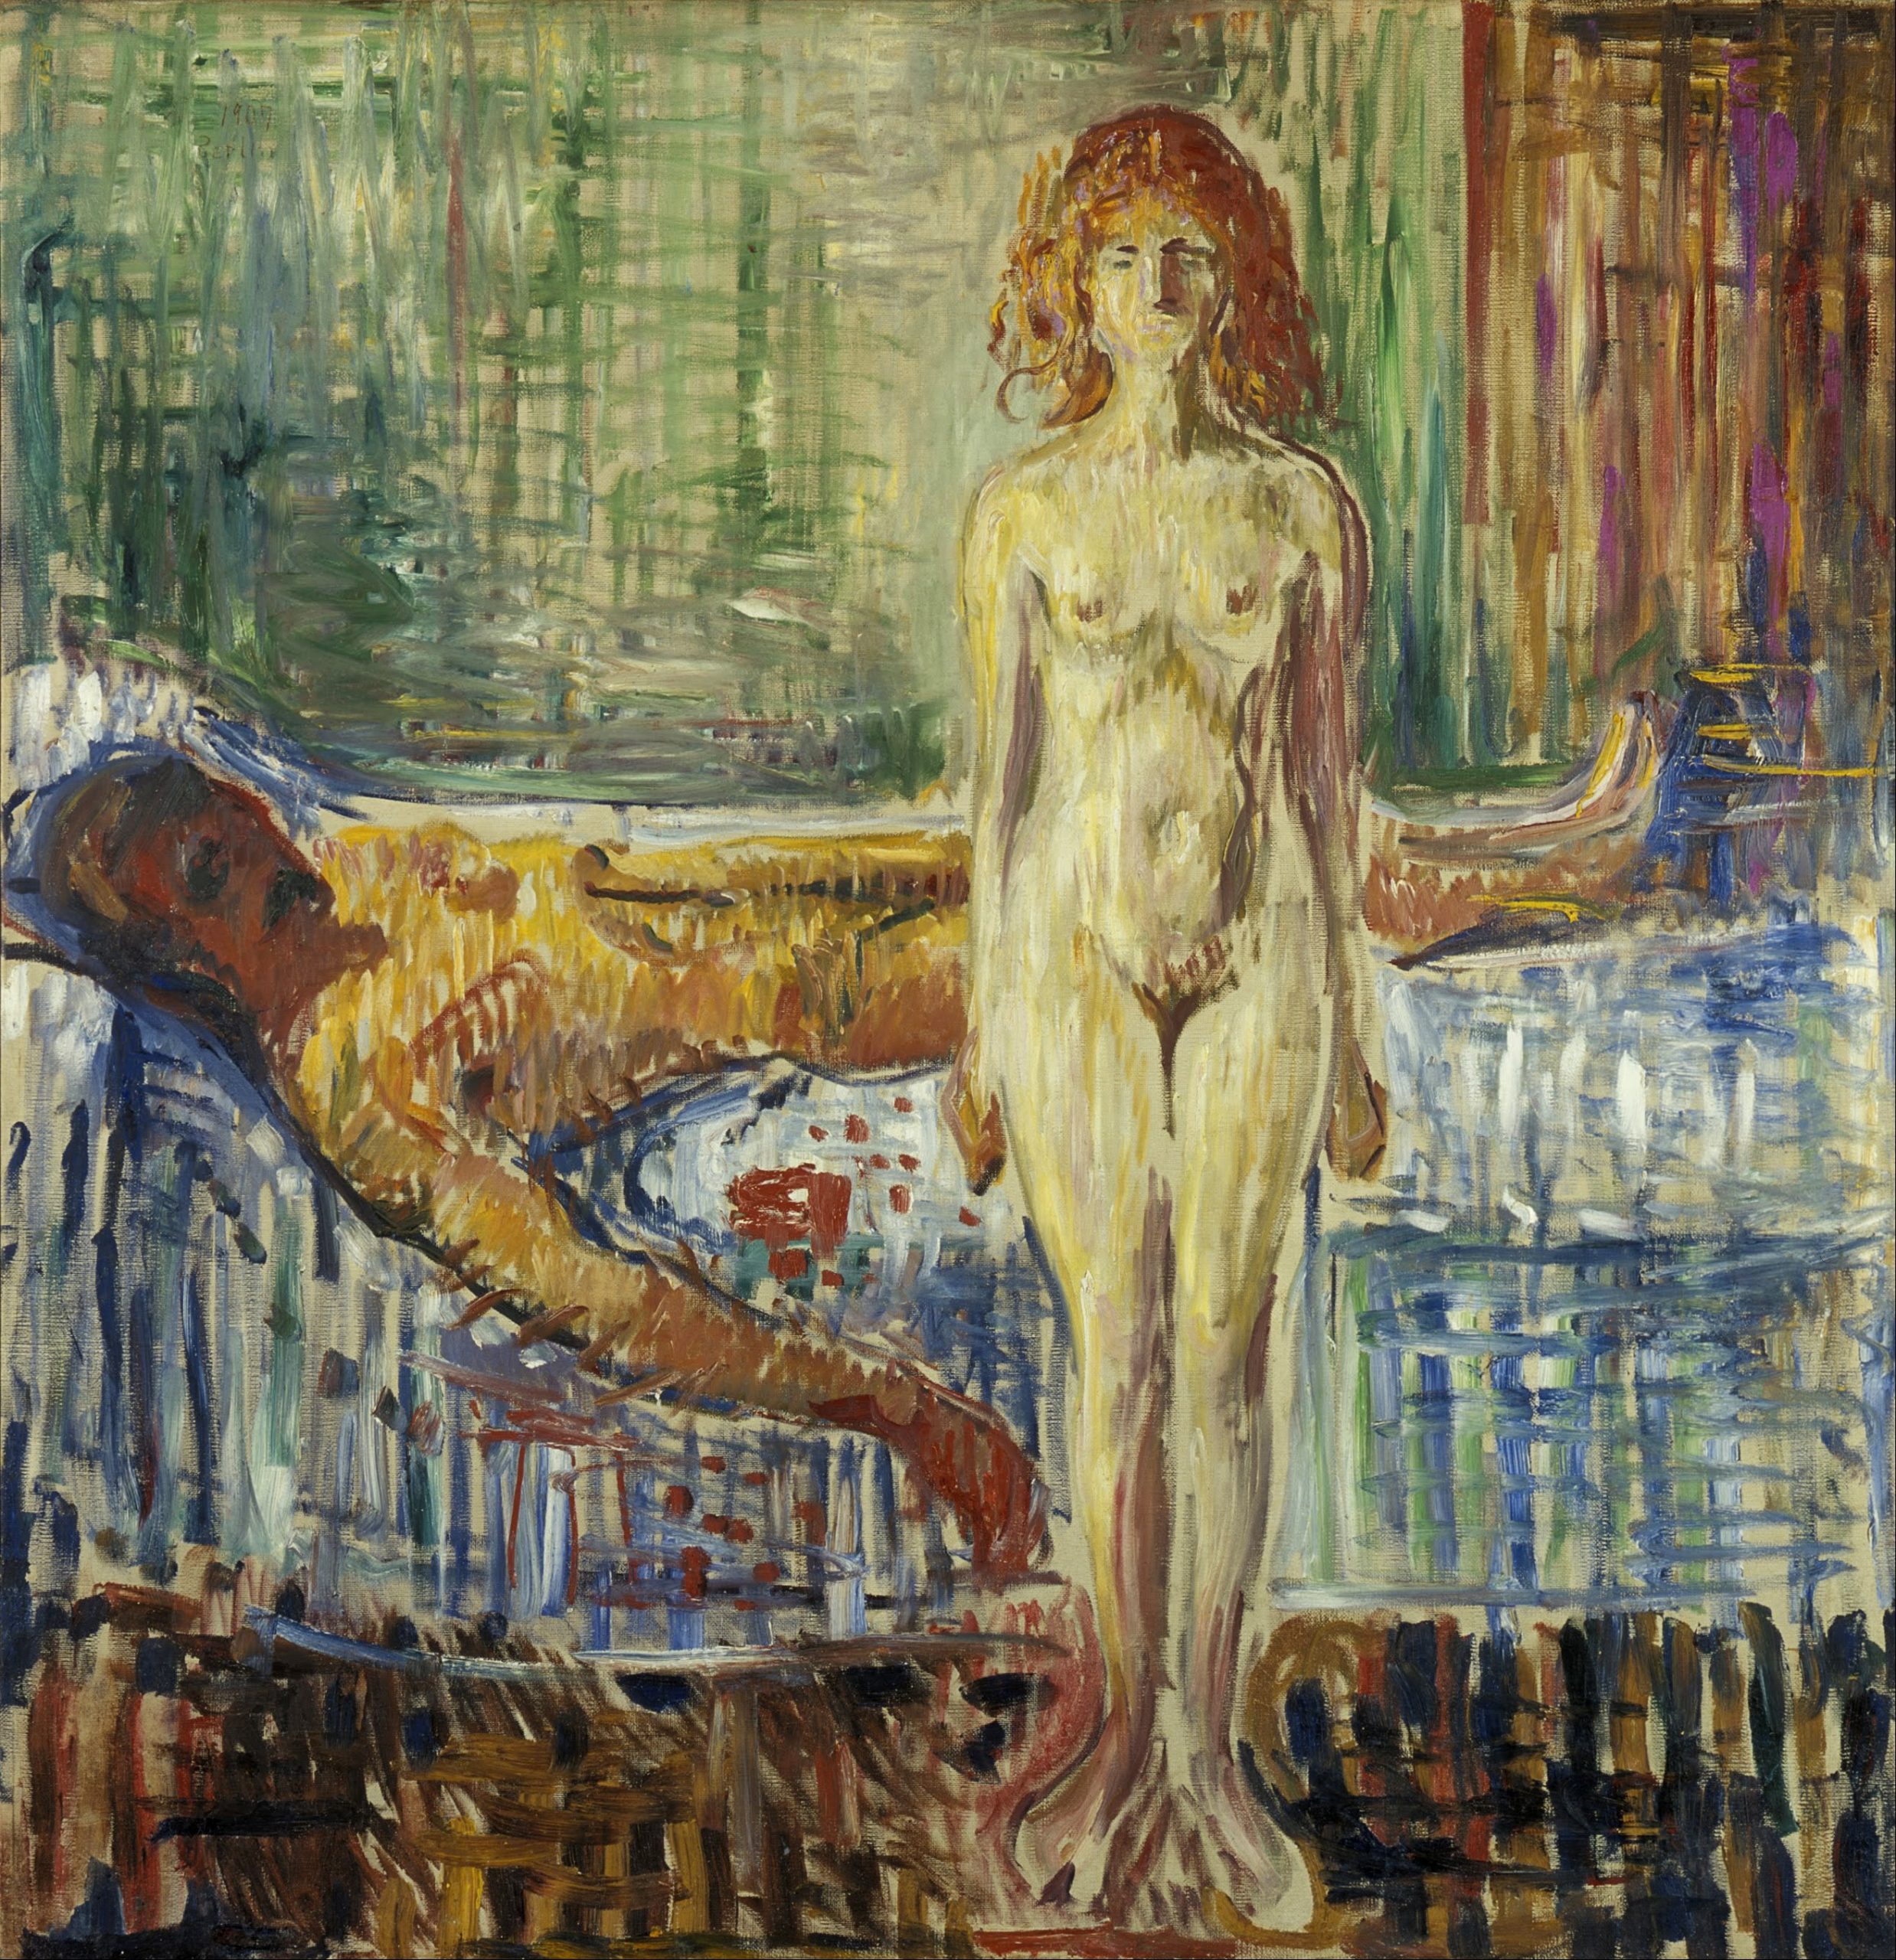 Murder She Wrote: The Death of Marat - Edvard Munch - 1907 - Norway | Academia Aesthetics